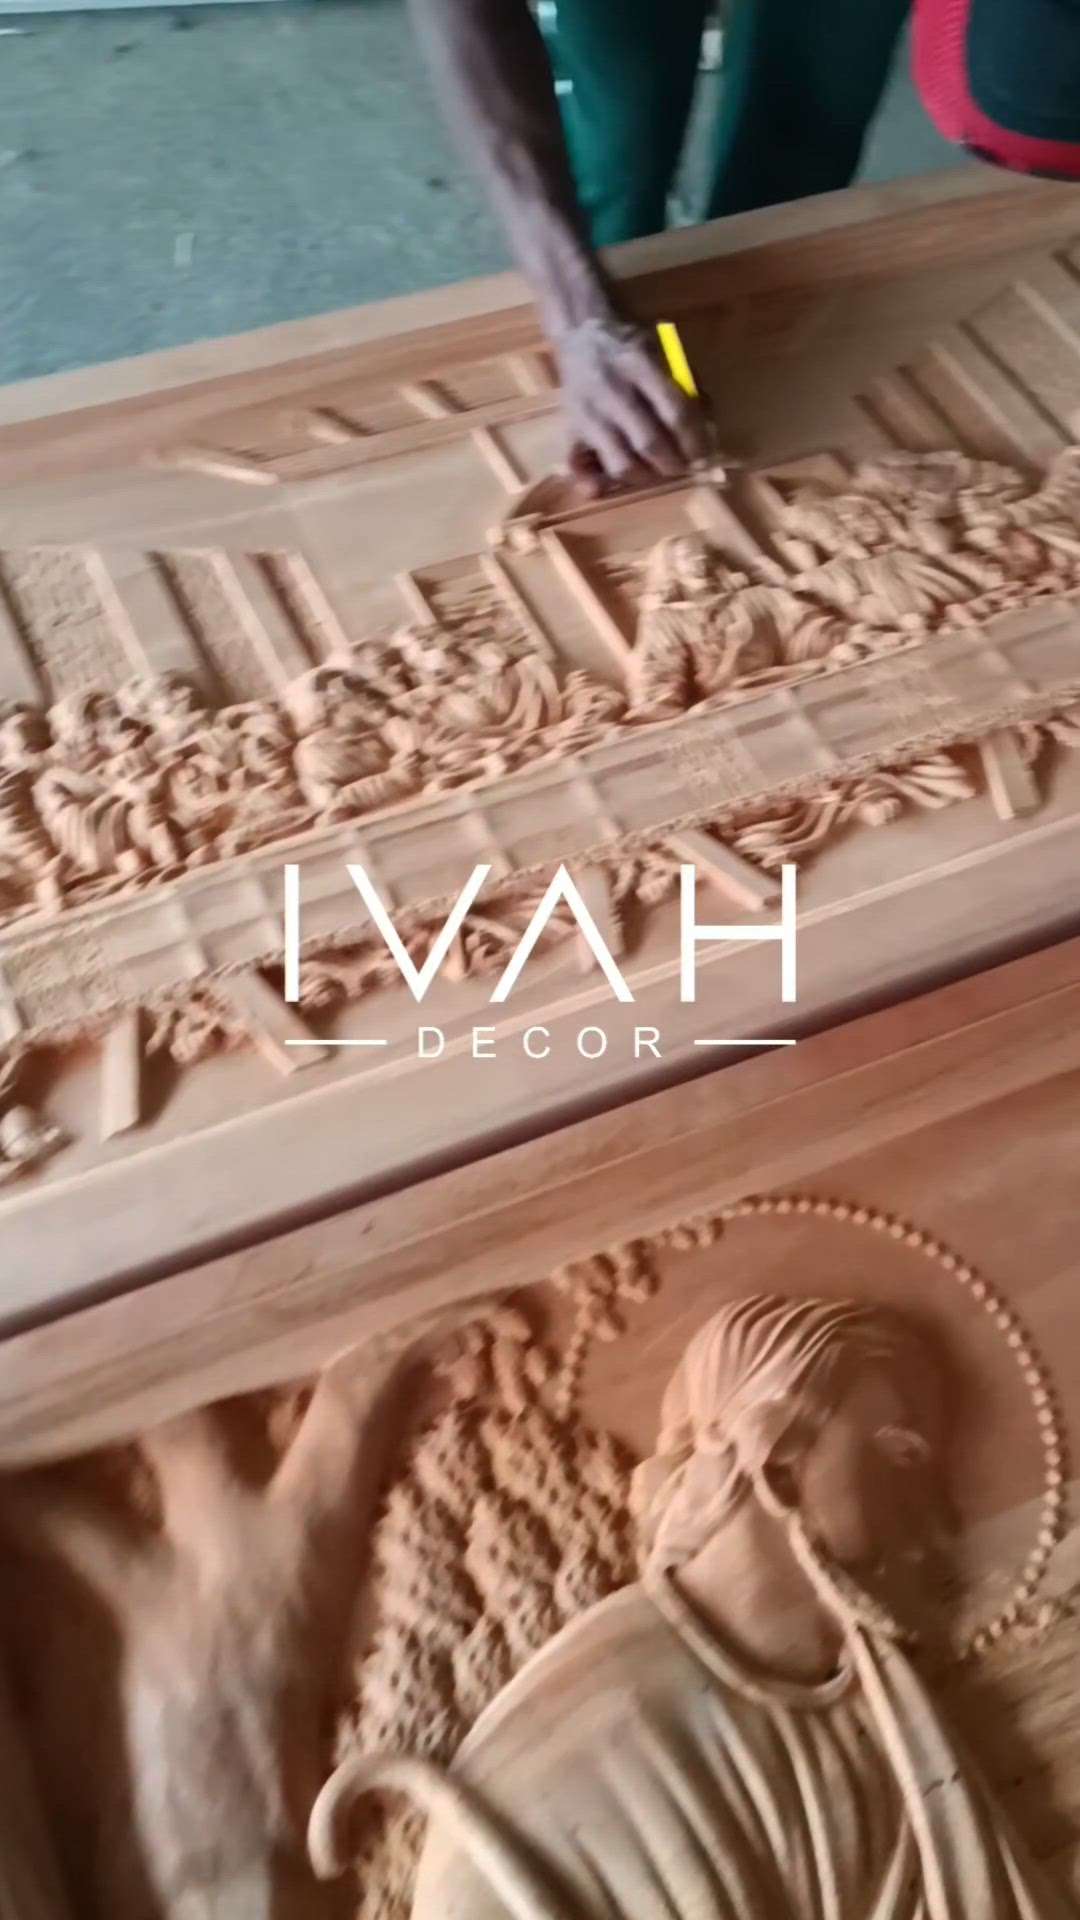 Wood carving wall decor : IVAH Decor

#ivah #ivahdecor #poojaroom #prayerroom #interiordesign  #kochigram #kochi  #Thrissur #premiumproduct #premiumquality